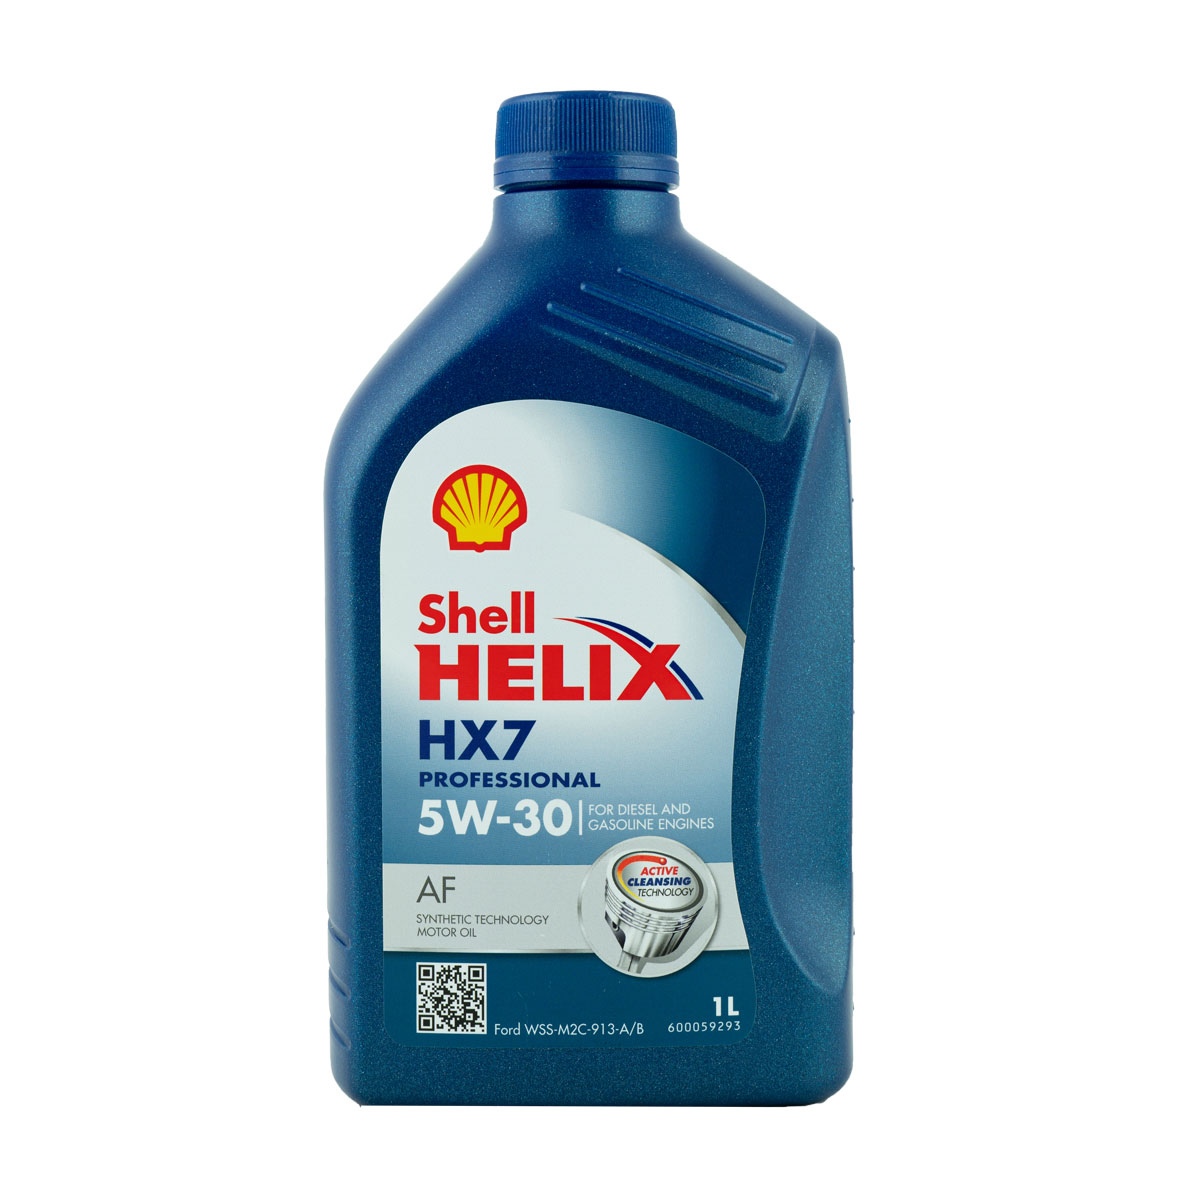 Shell Helix HX7 Prof.AF 5W-30 1L